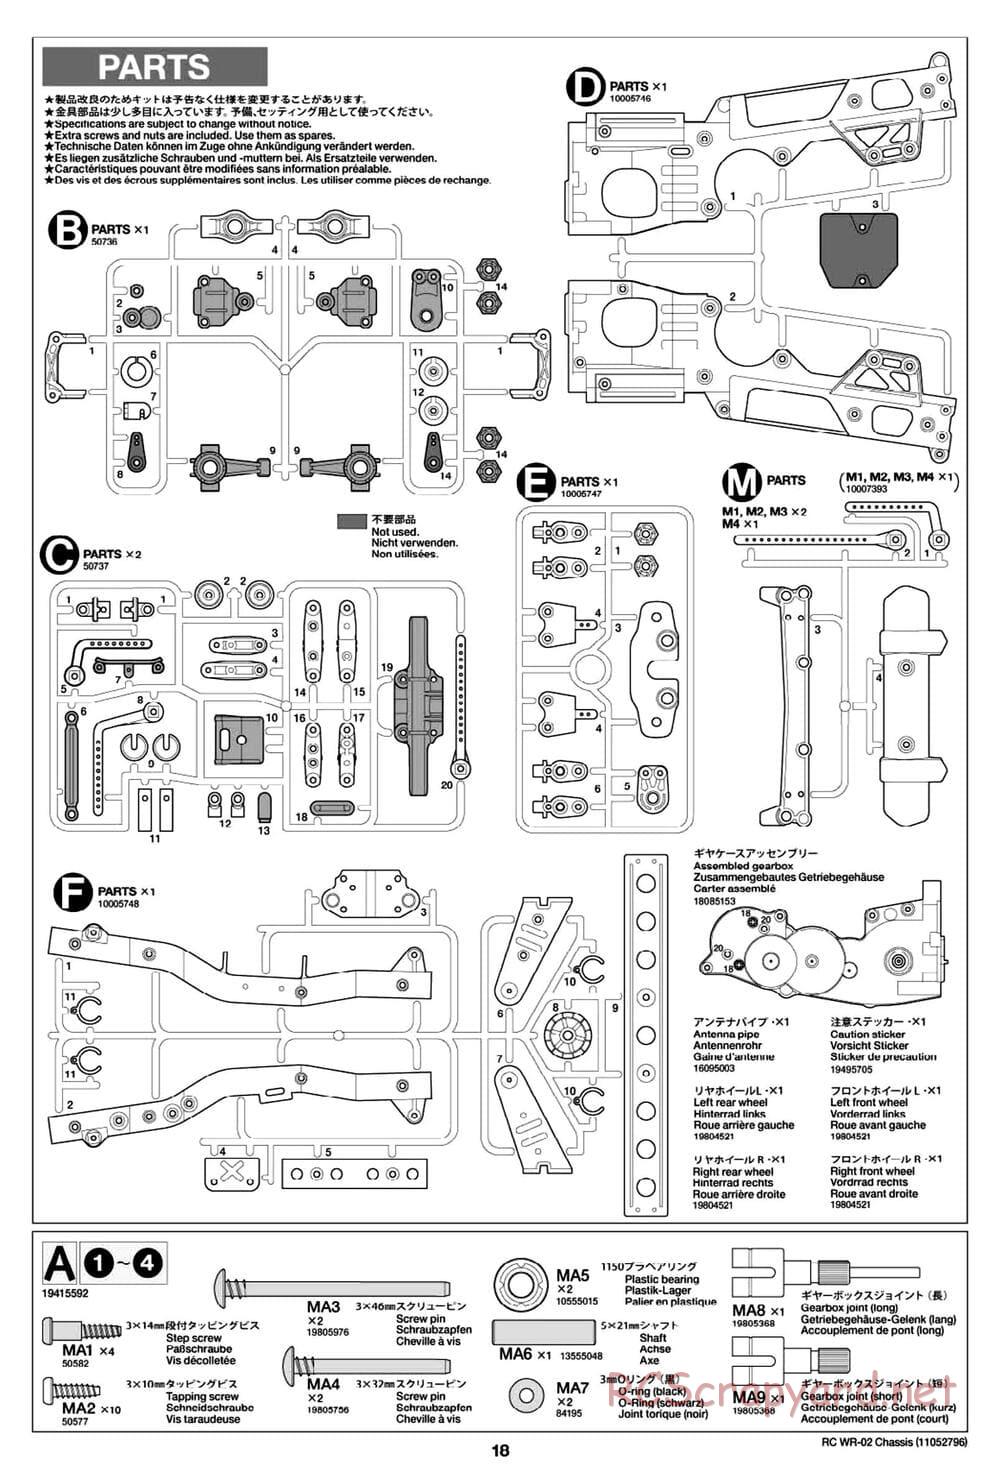 Tamiya - WR-02 Chassis - Manual - Page 18